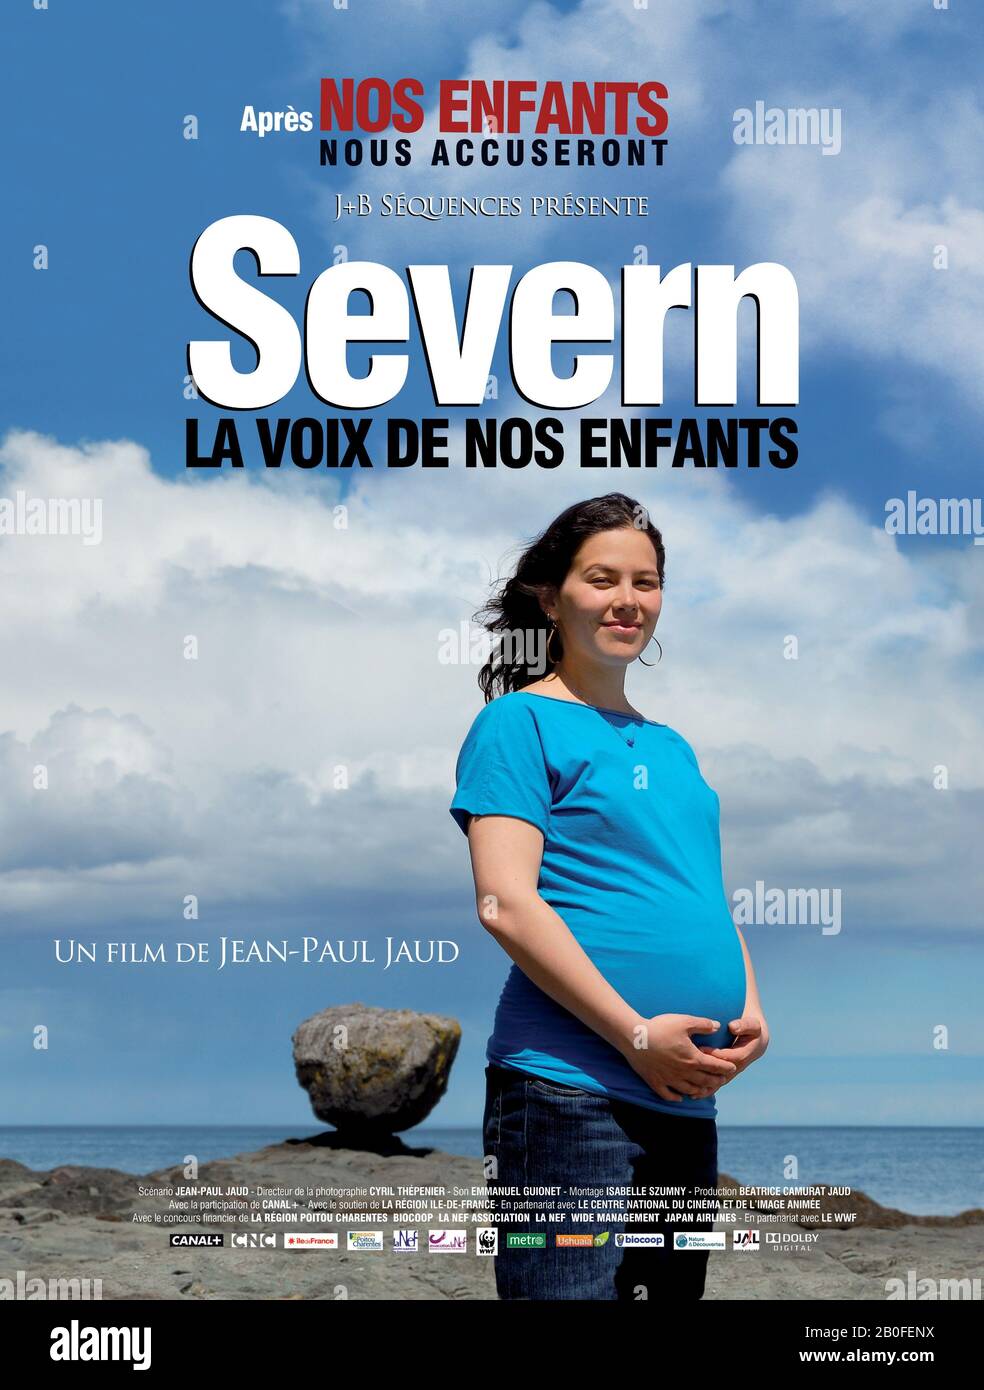 Severn, la voix de nos enfants anno : 2010 Francia Direttore : Jean-Paul Jaud documentario Severn Cullis-Suzuki poster del film (Fr) Foto Stock